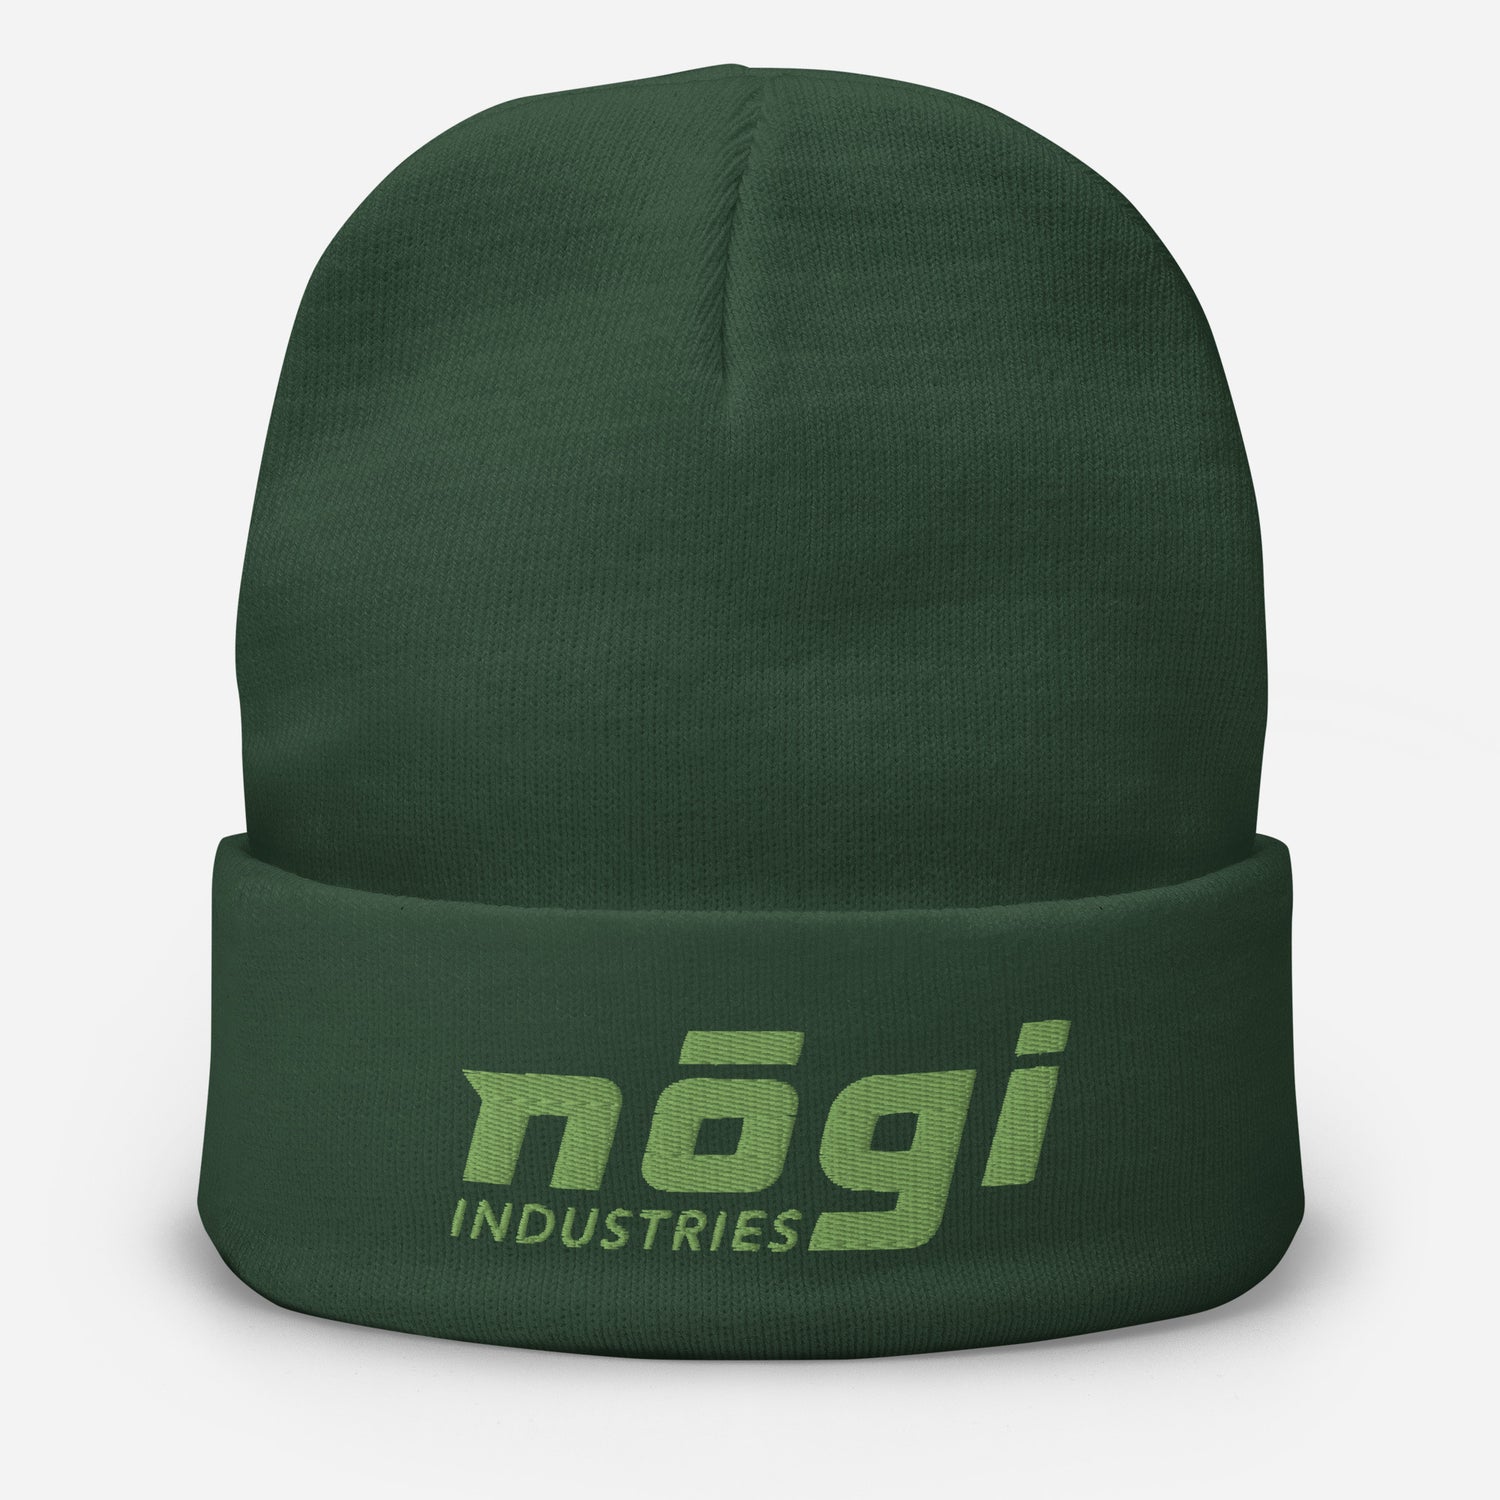 Nogi Industries のパフロゴ付き刺繍ビーニー (グリーン & グリーン)